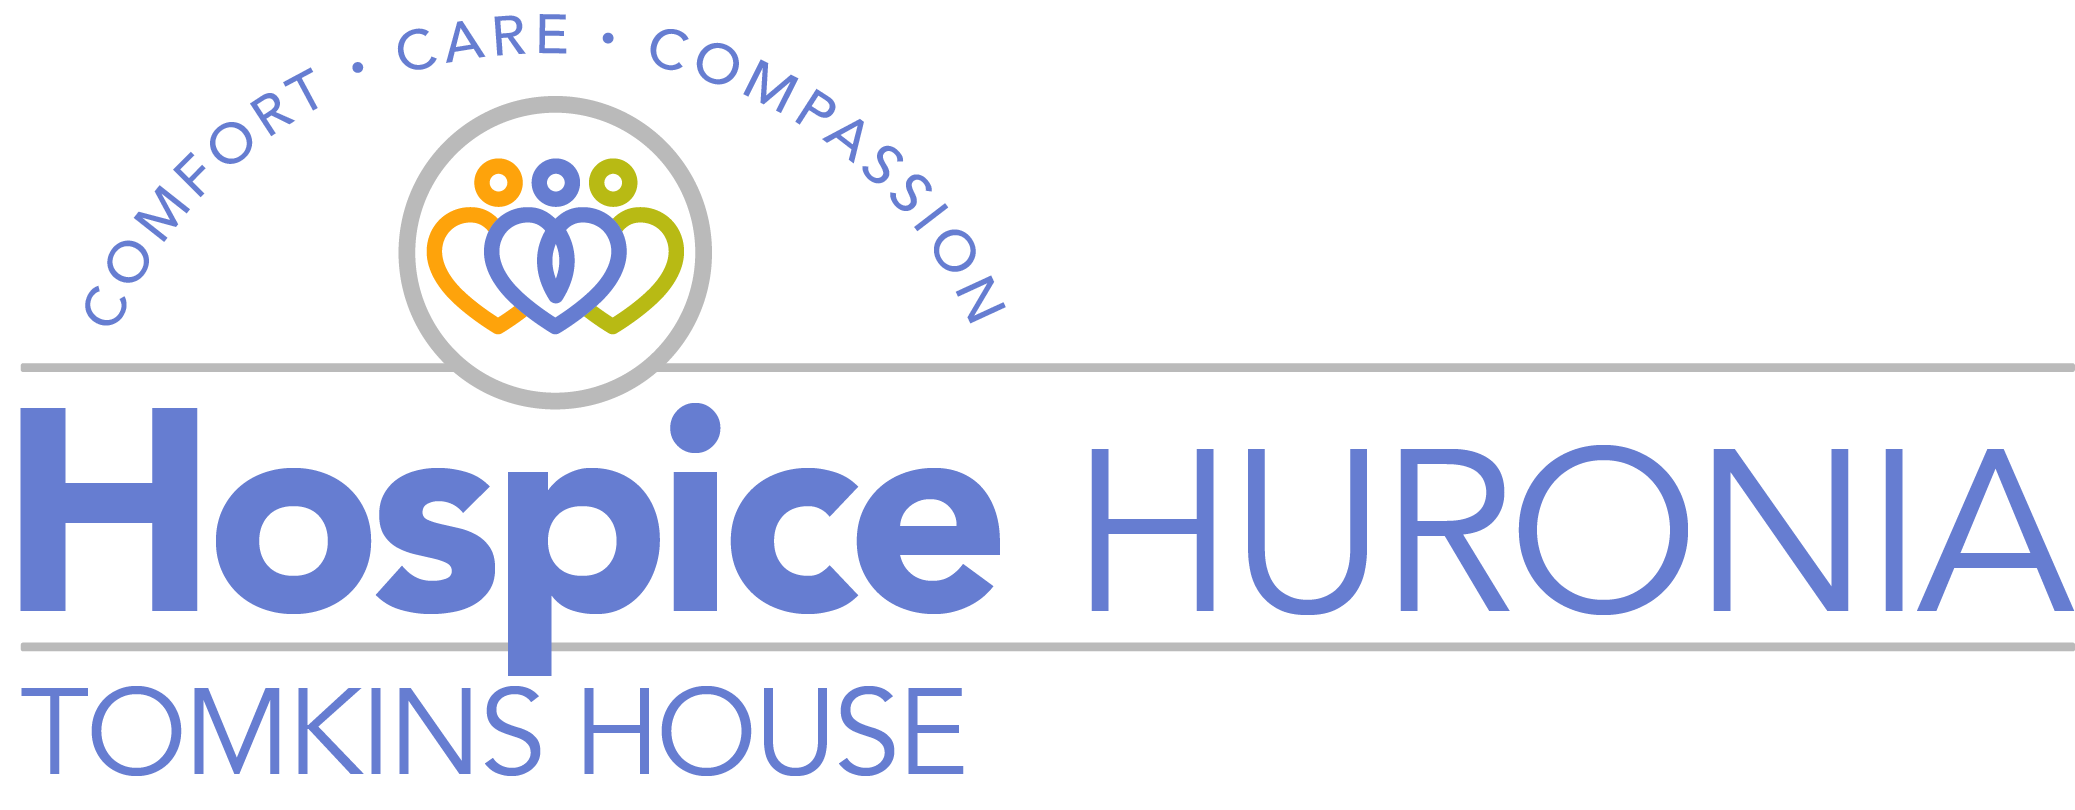 Hospice huronia tomkins house logo